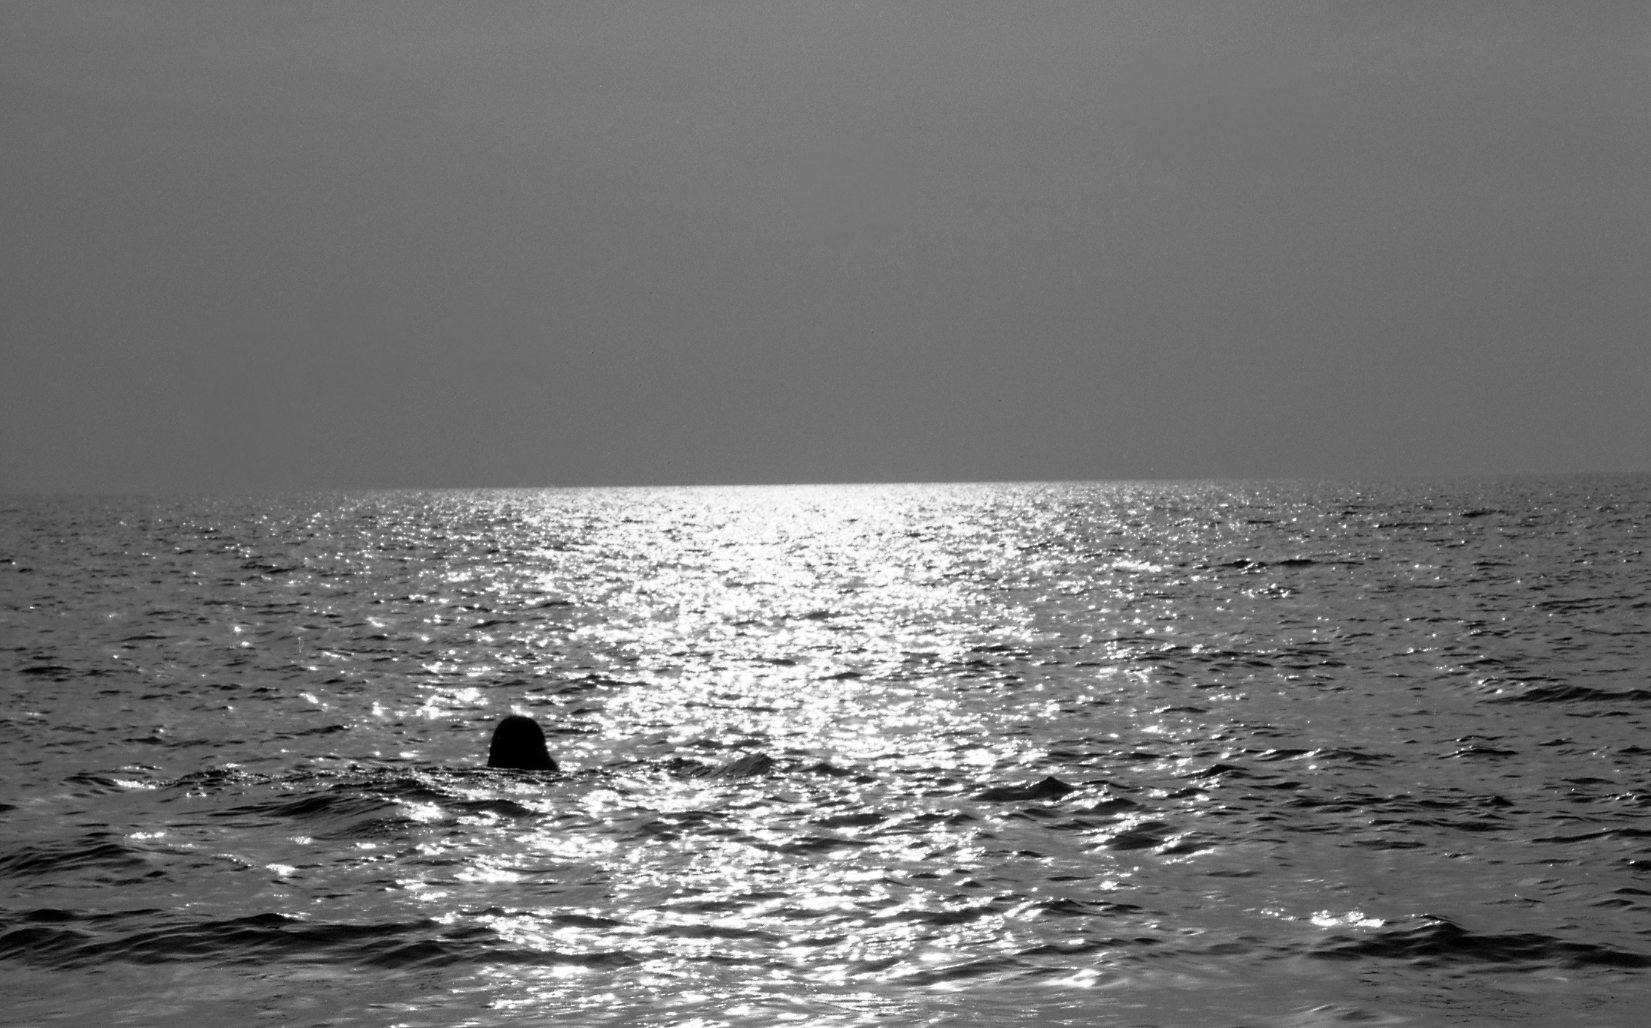 Robin Rice Black and White Photograph – Woman Swimming, Cala Violina, Grosseto, Italien, 2002